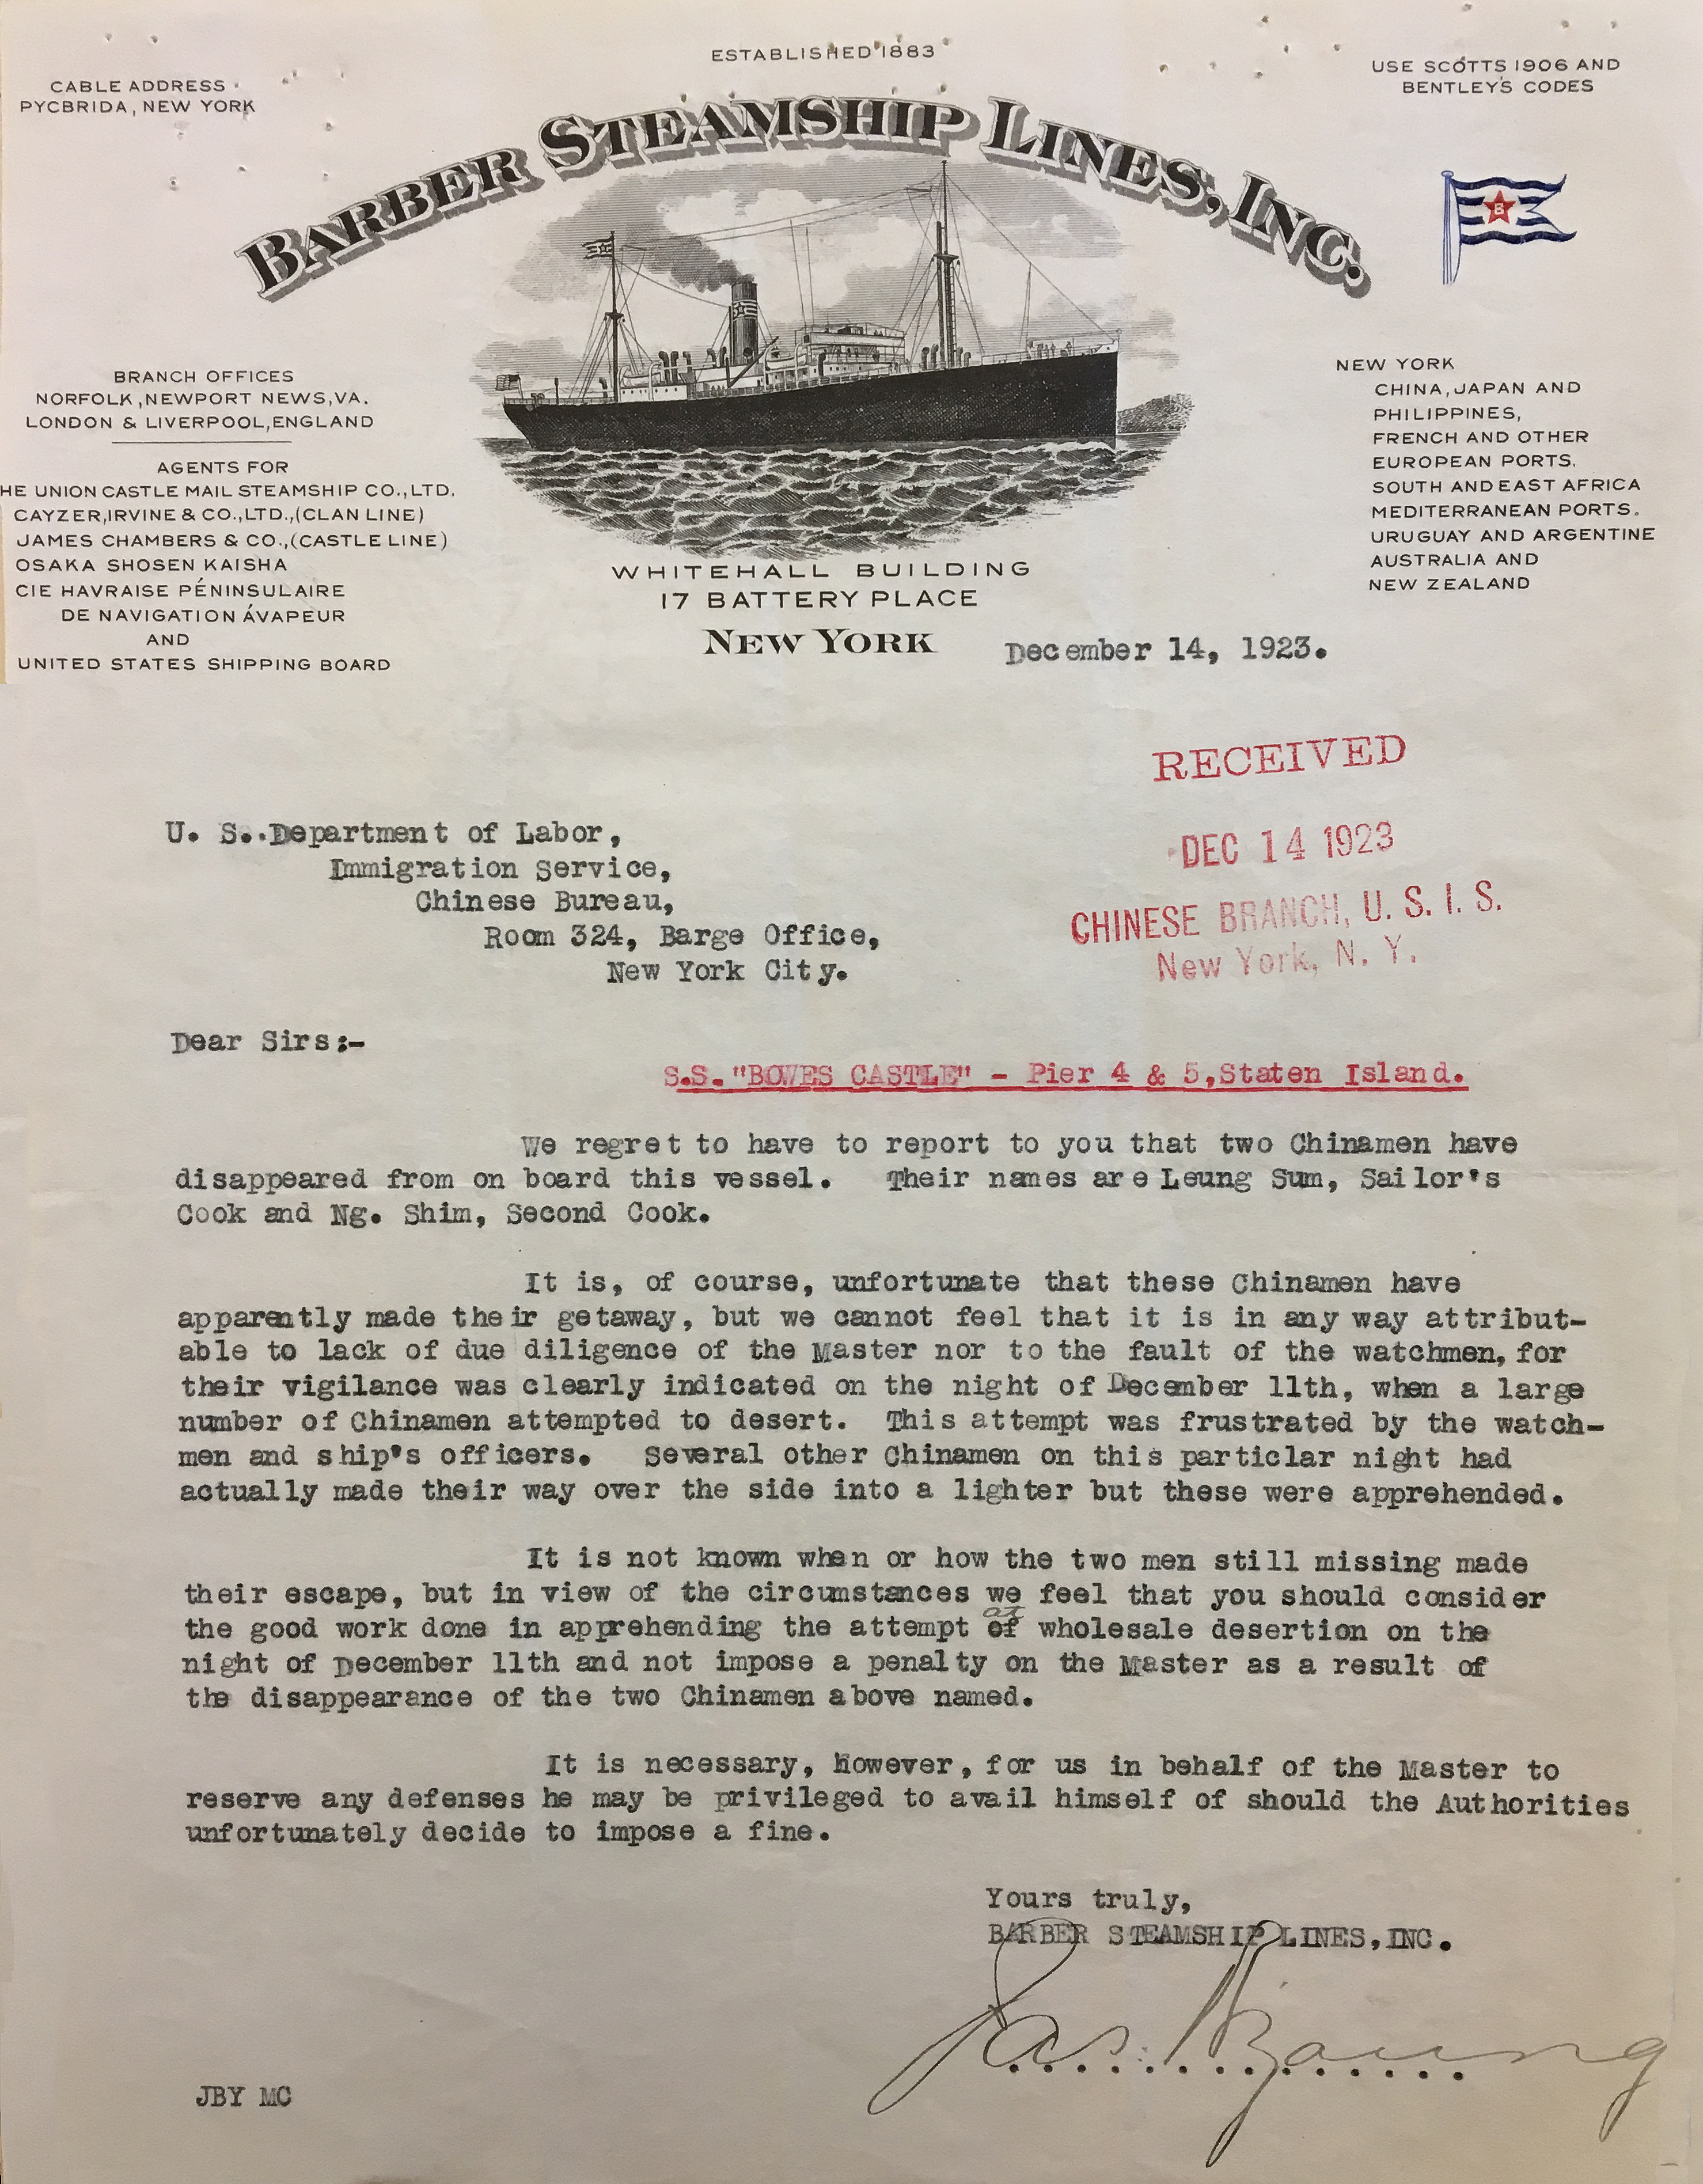 Letter from Barber Steamship Lines to the Bureau of Immigration, Ellis Island, December 23, 1923.